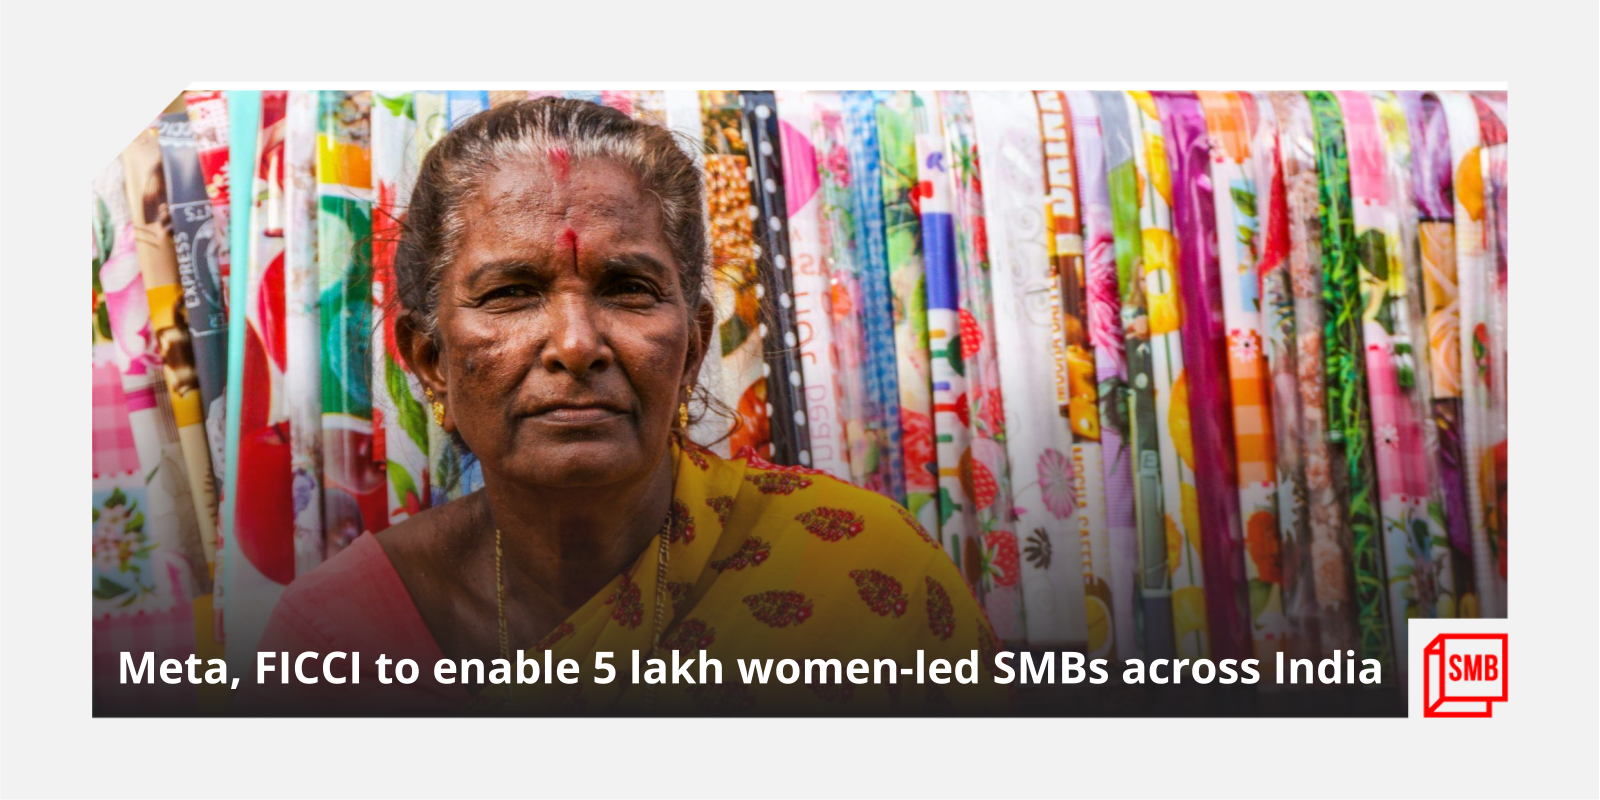 Meta, FICCI partner to enable 5 lakh women-led SMBs pan India